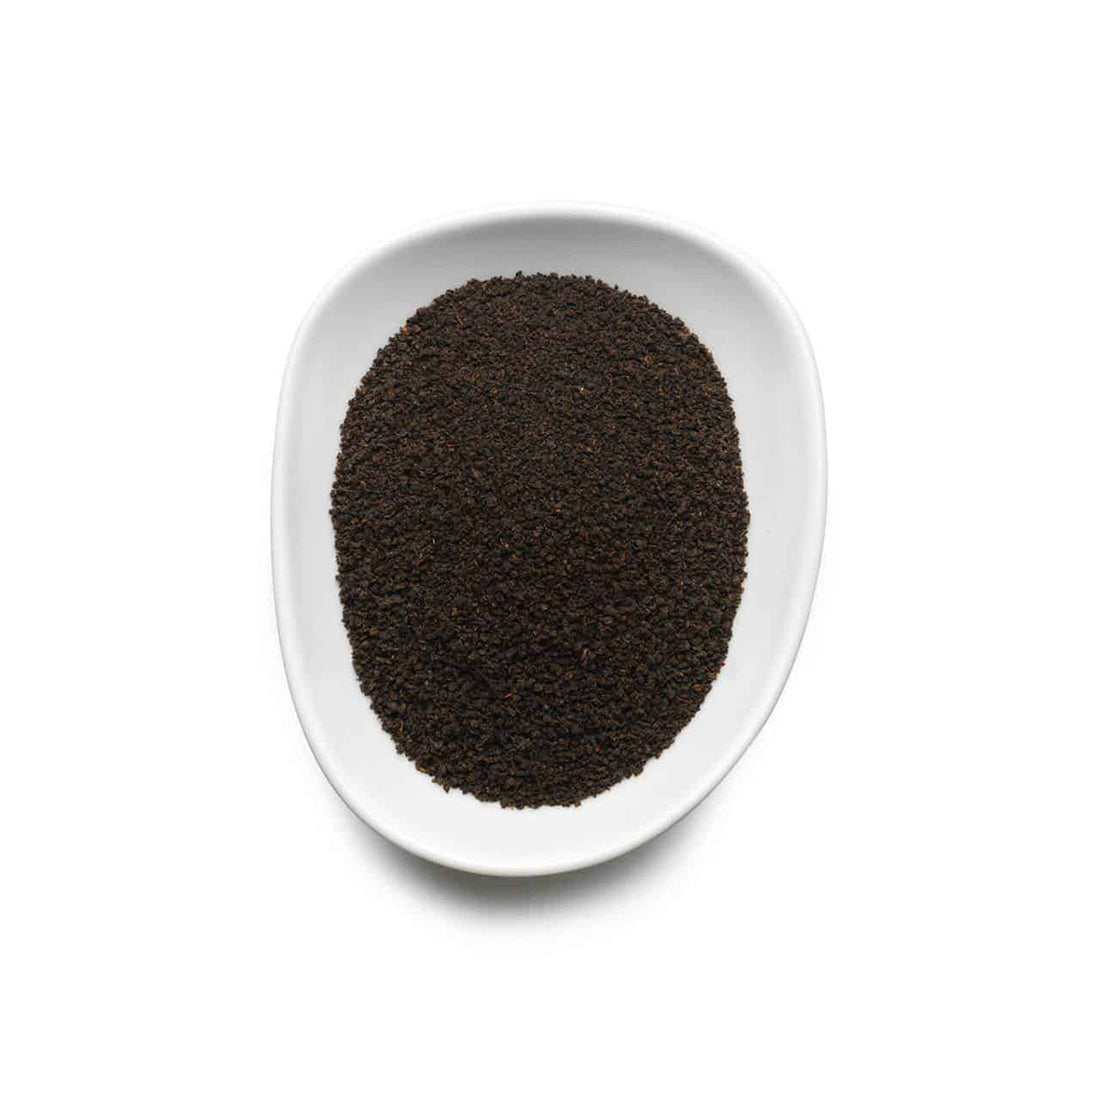 Birchall, Birchall Plant-based Everyday Tea Bags 80pcs - Great Rift Breakfast Blend, Redber Coffee